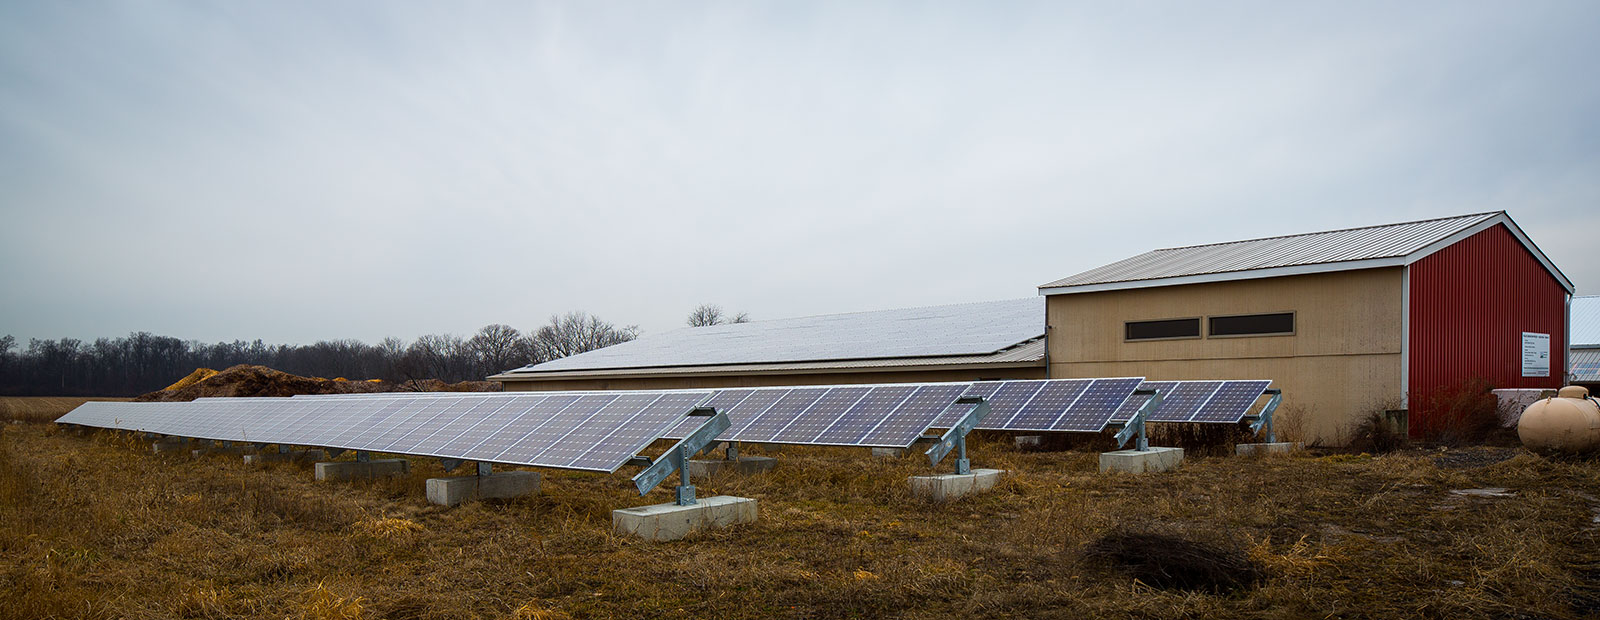 The Brinery's new solar-powered production facility